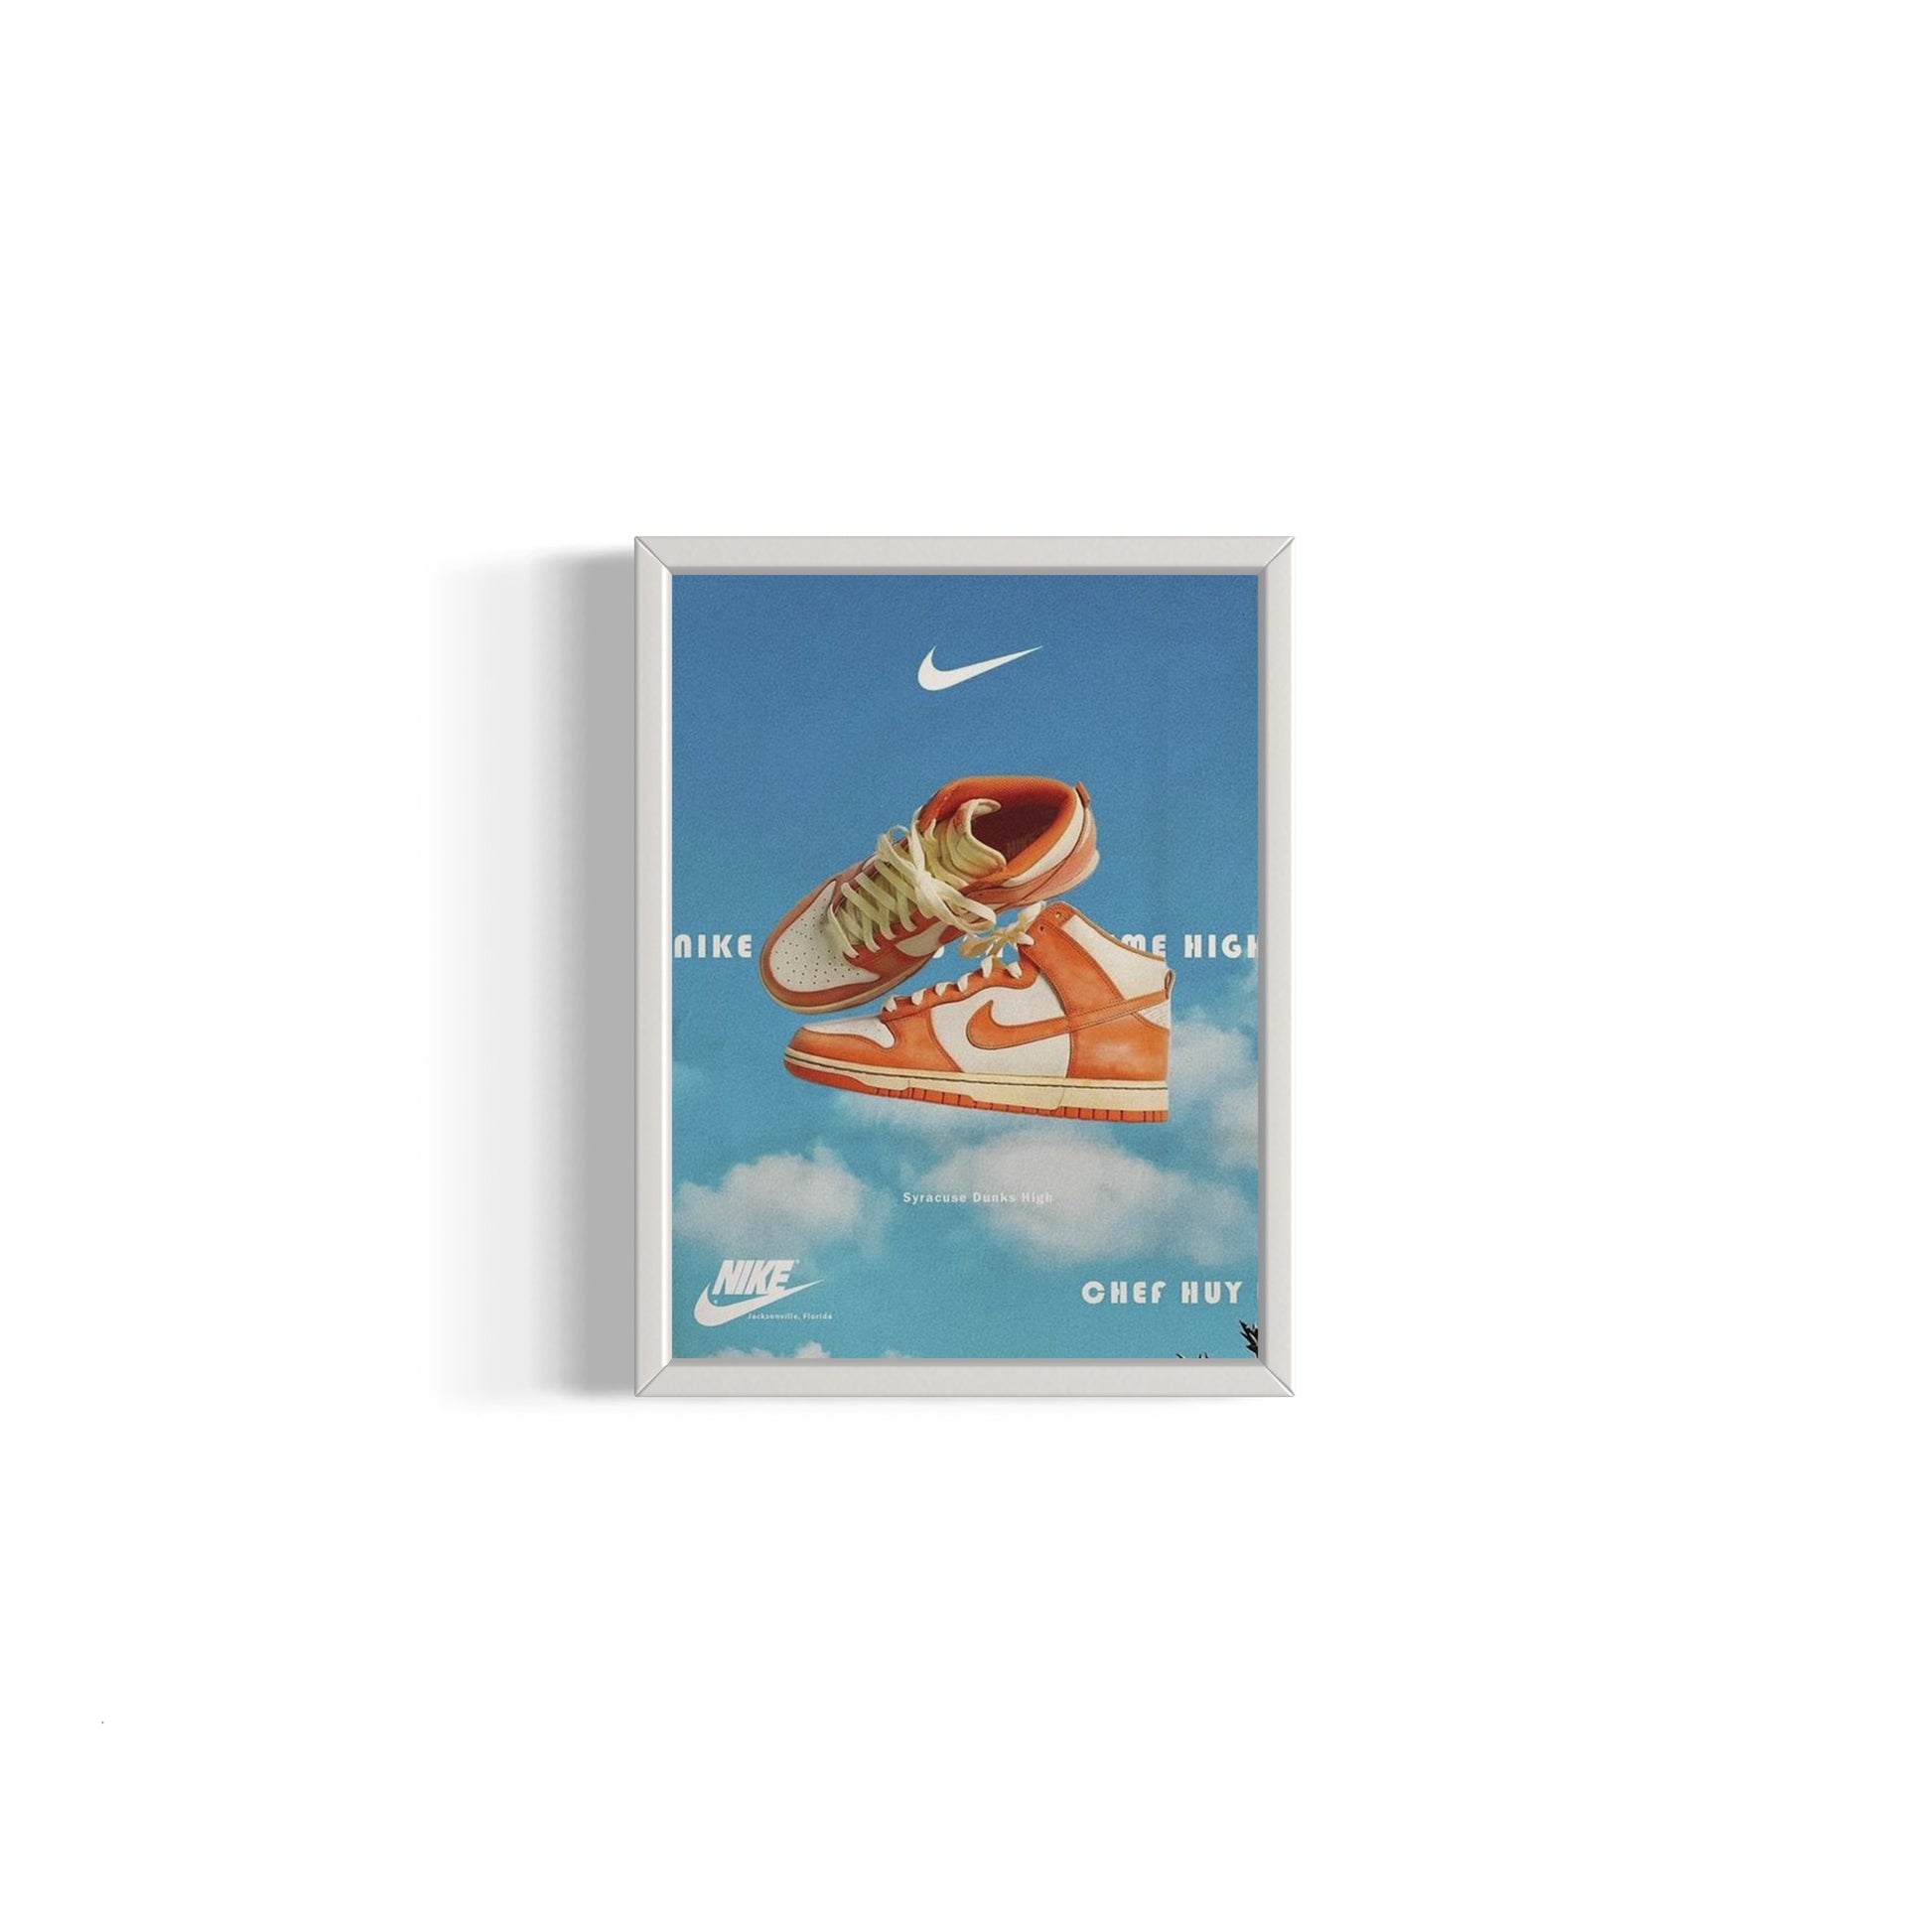 Nike Poster #1 - Wall of Venus